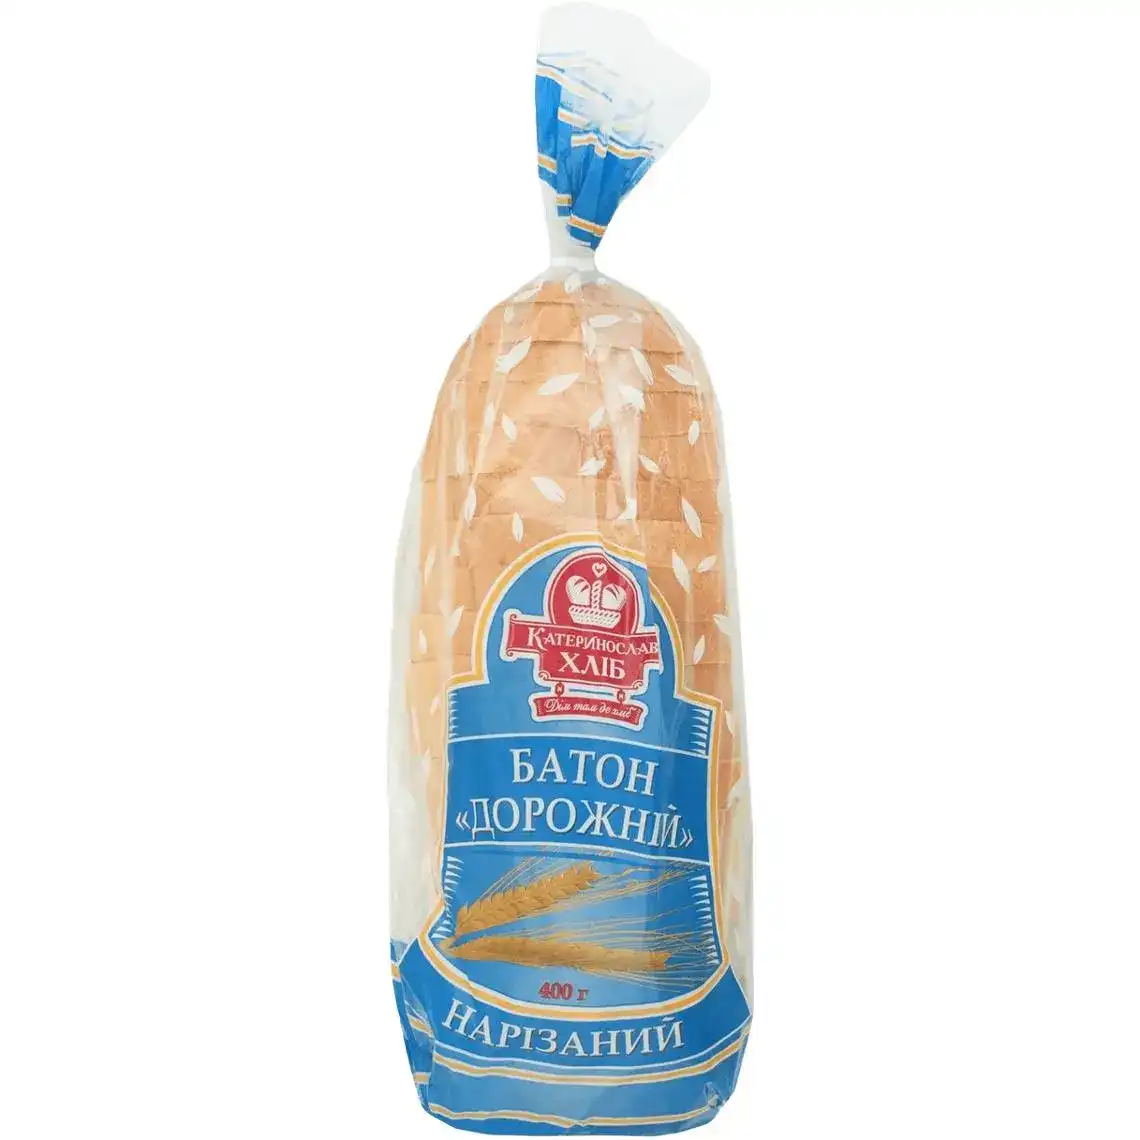 Батон Катеринославхліб Дорожний пшеничный нарезной 400 г